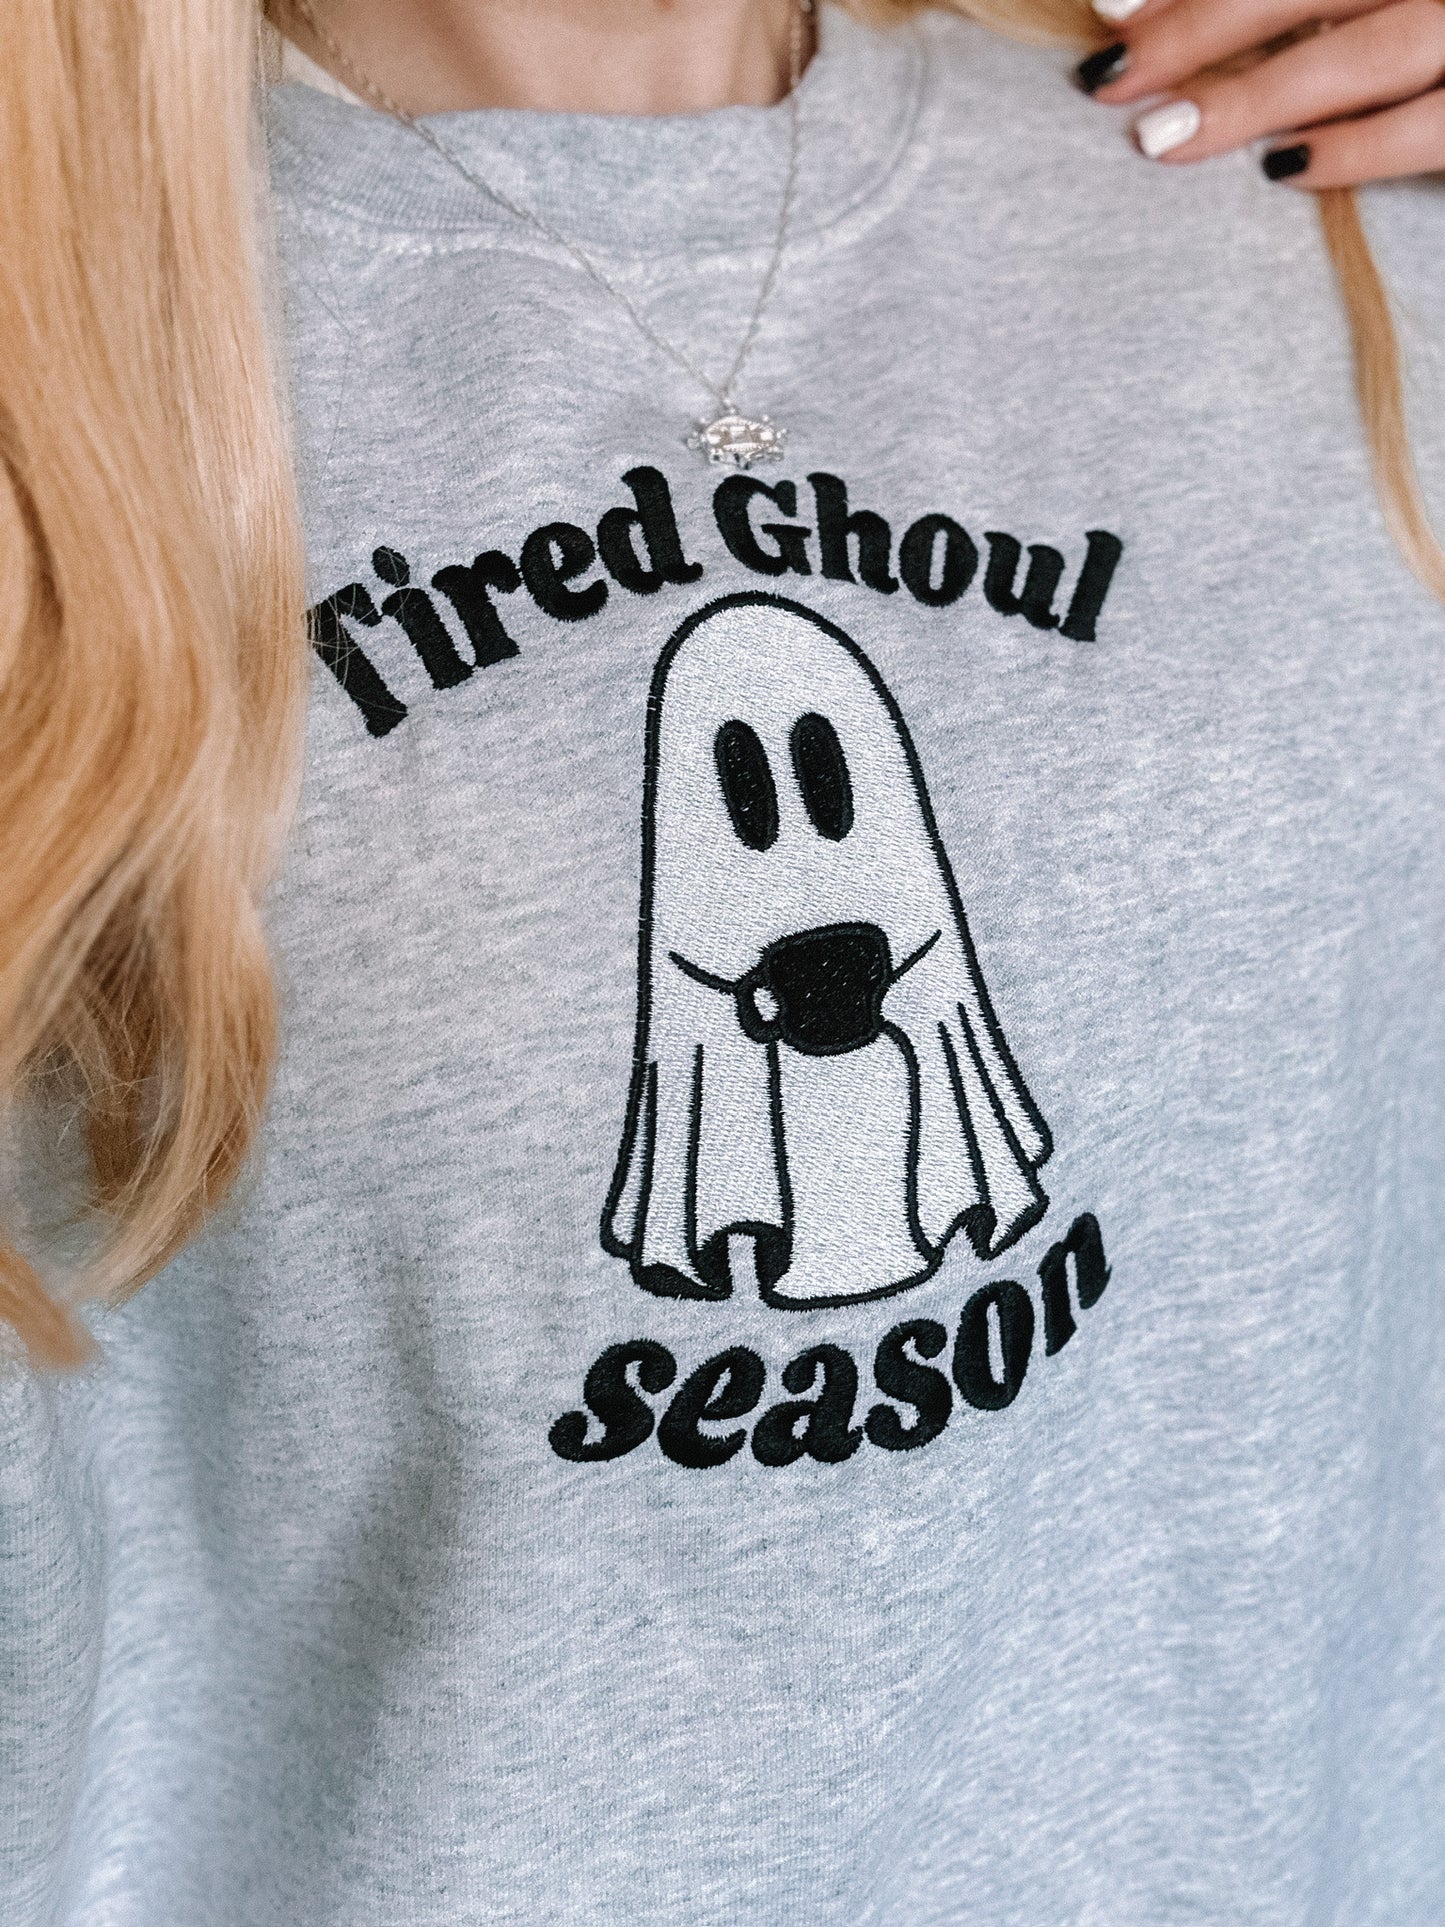 Tired Ghoul Season crewneck sweatshirt